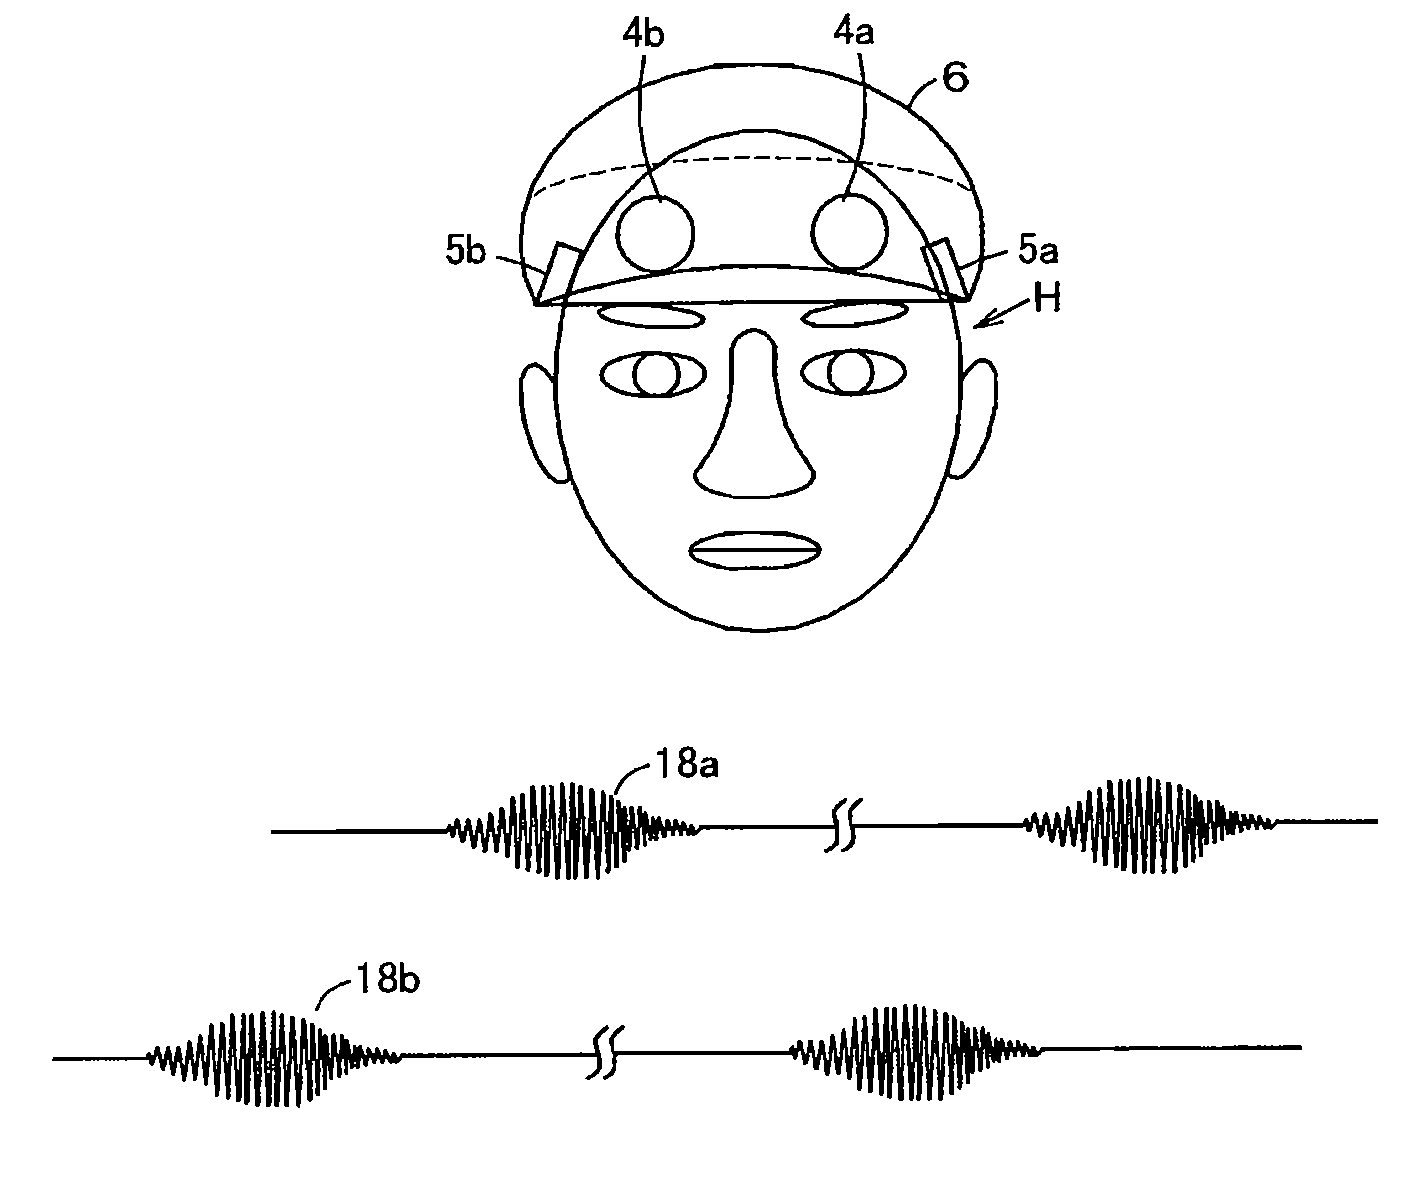 Neurological disease prevention apparatus through sound wave vibration